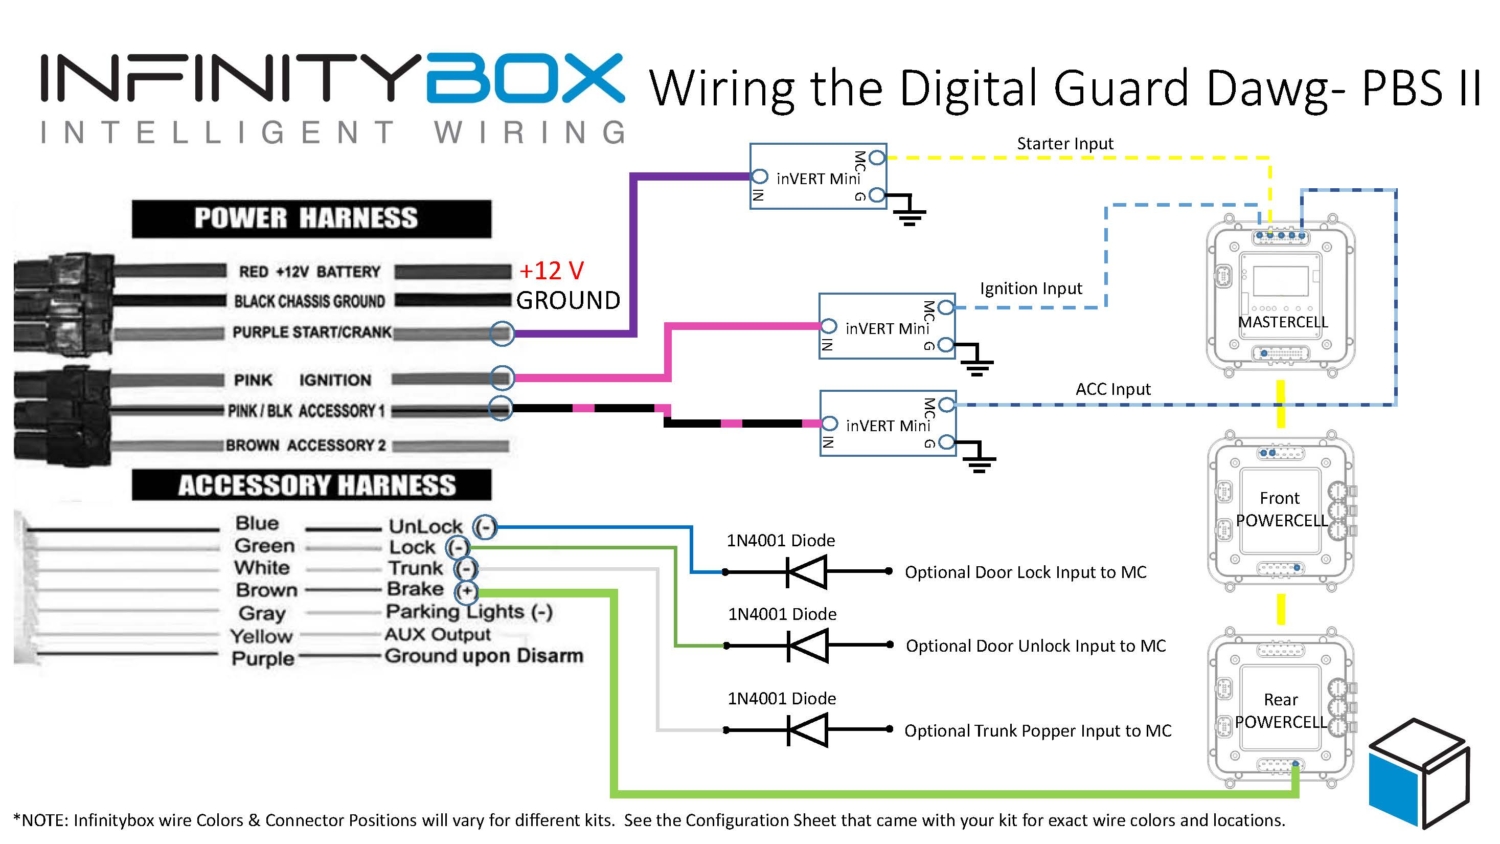 Digital Guard Dawg PBS II Wiring - Infinitybox